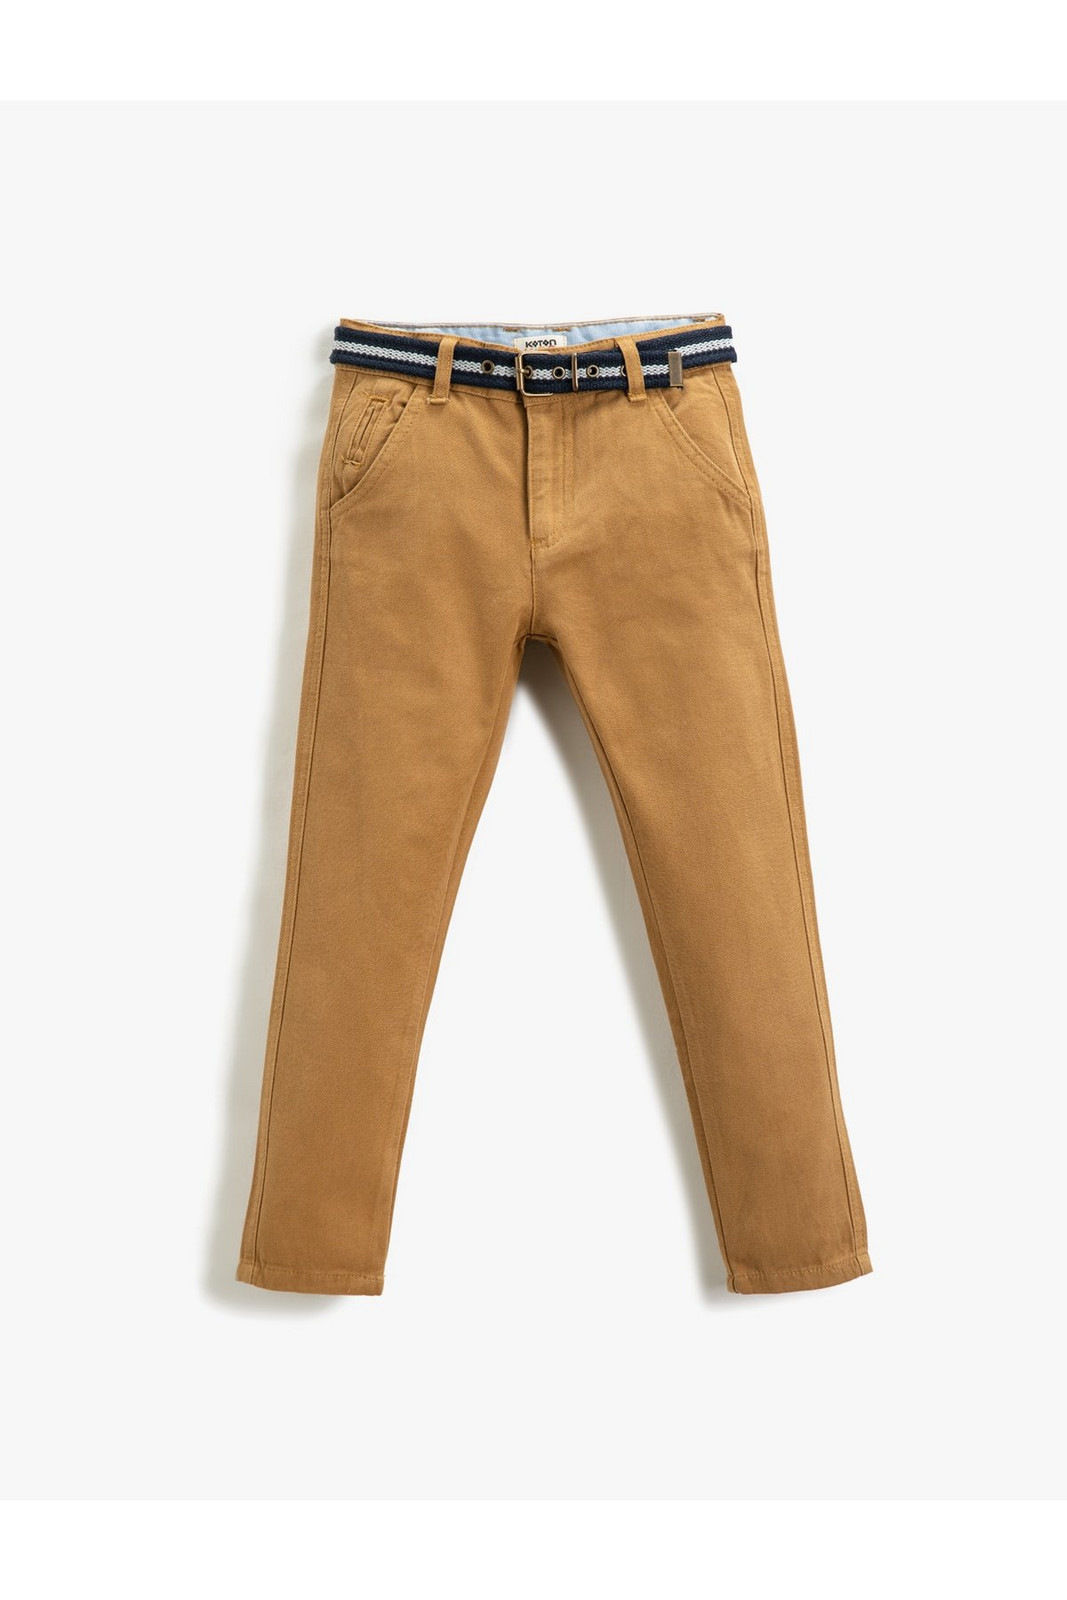 Koton Fabric Trousers Slim Fit Belt, Pockets, Adjustable Elastic Waist, Adjustable Elastic Waist.